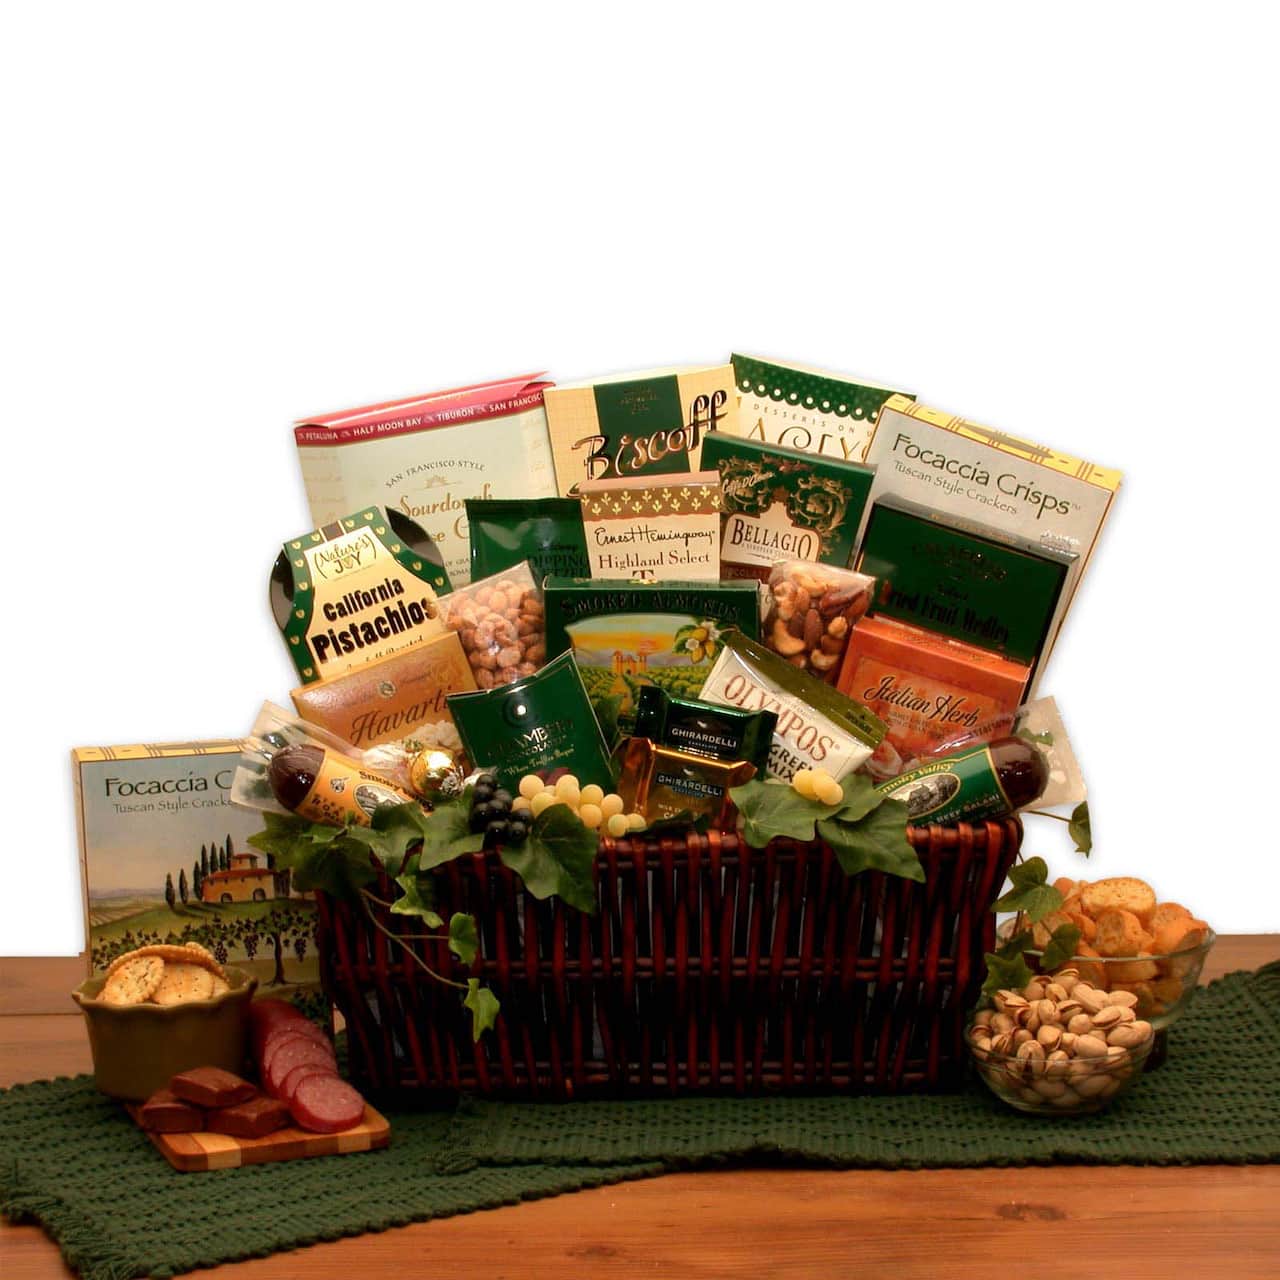 The Indulgent Gourmet Gift Basket